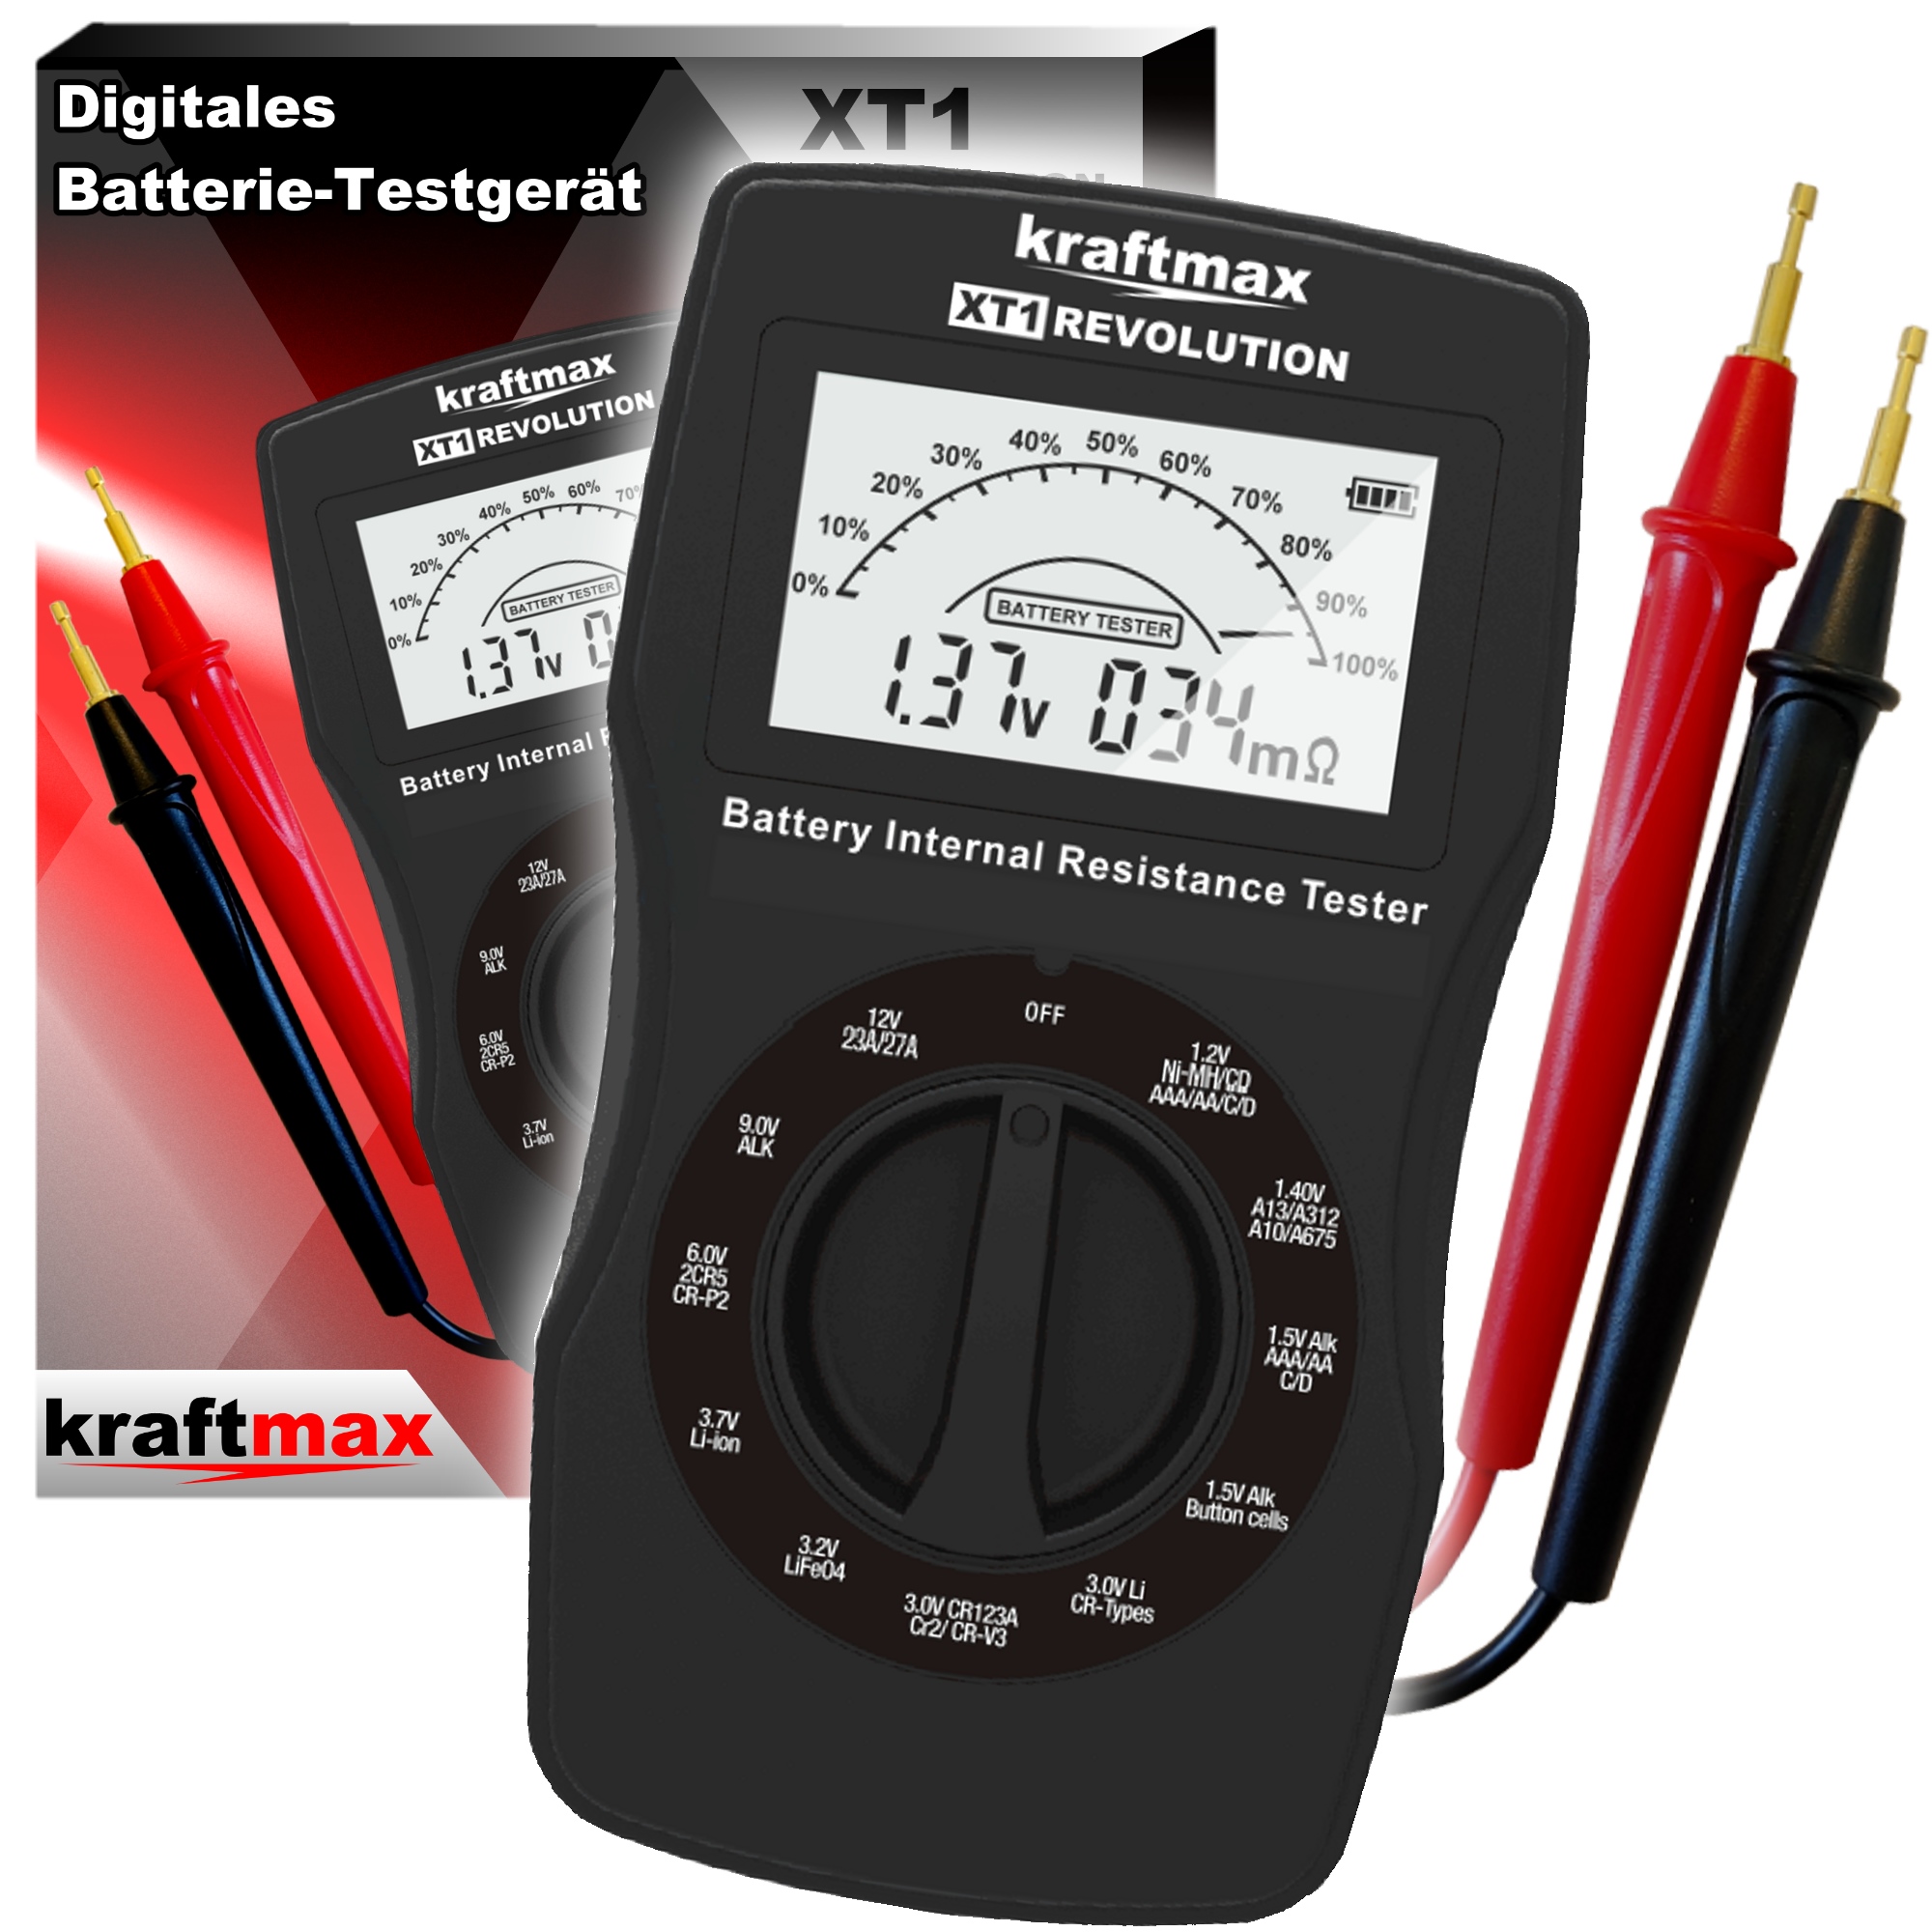 Kraftmax Profi Batterietester XT1 Revolution